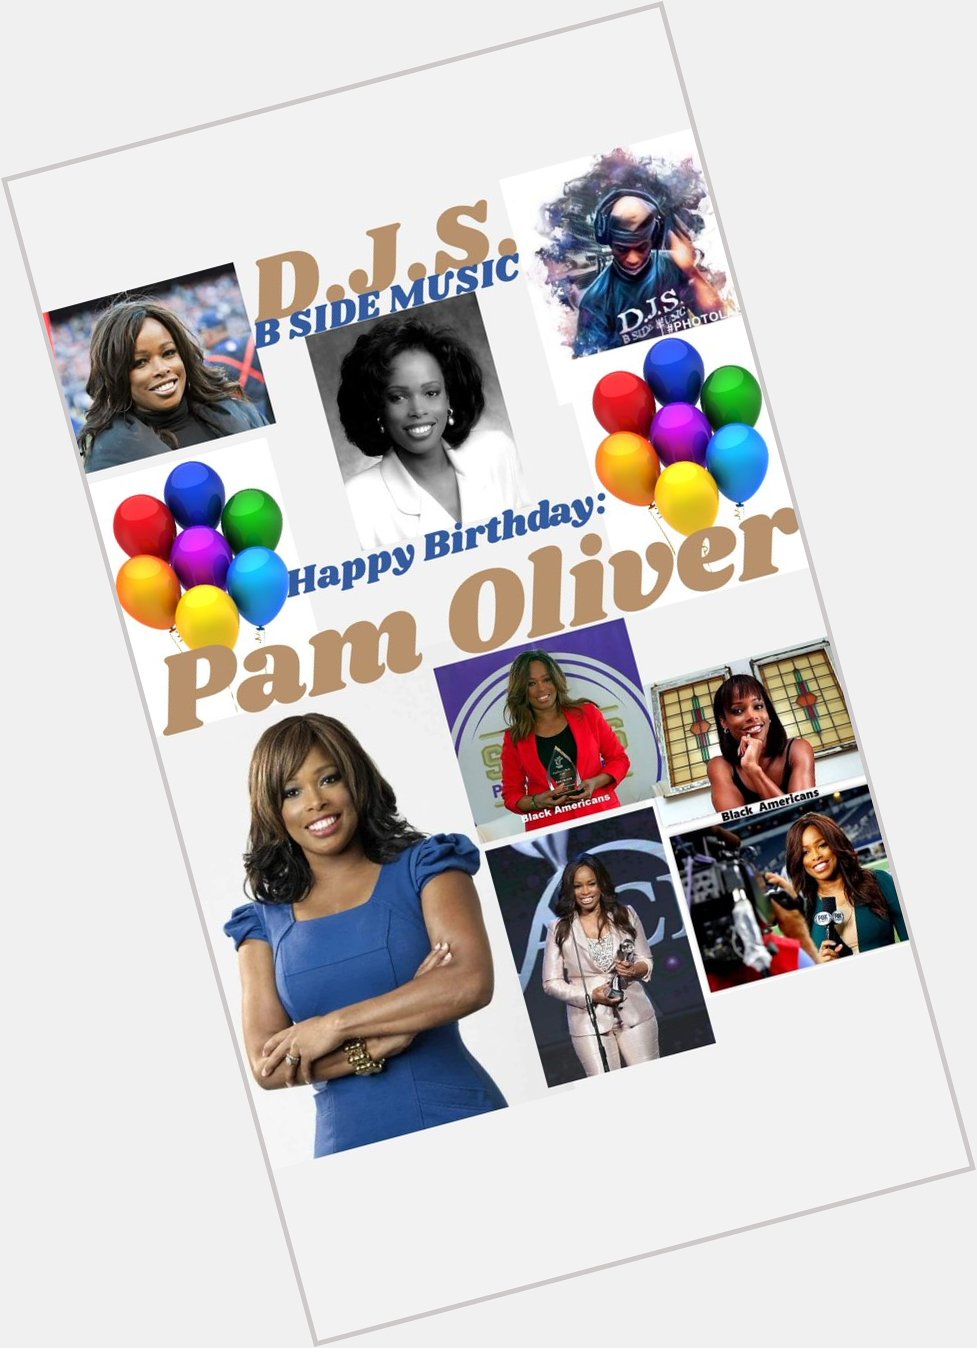 I(D.J.S.)\"B SIDE MUSIC\" wish Sportscaster: \"PAM OLIVER\" Happy Birthday!!! 